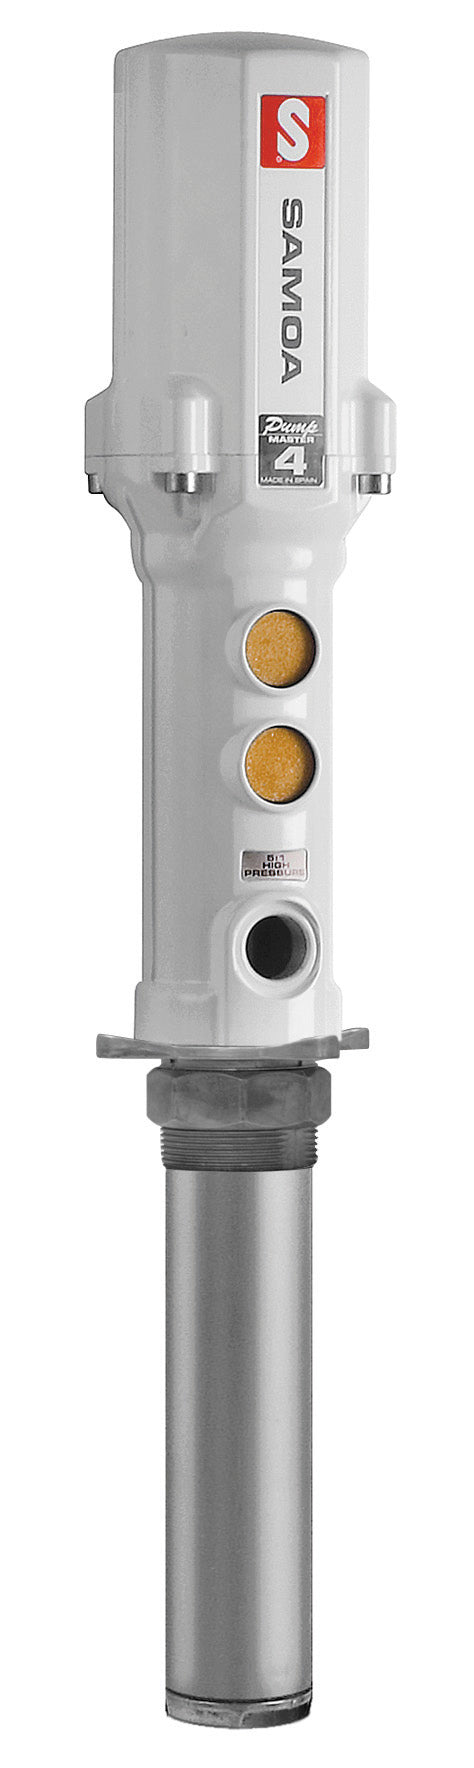 SAMOA® Pumpmaster 4, 3:1 Ratio High Volume Oil Pump - Universal Stub Pump (CPE340120)